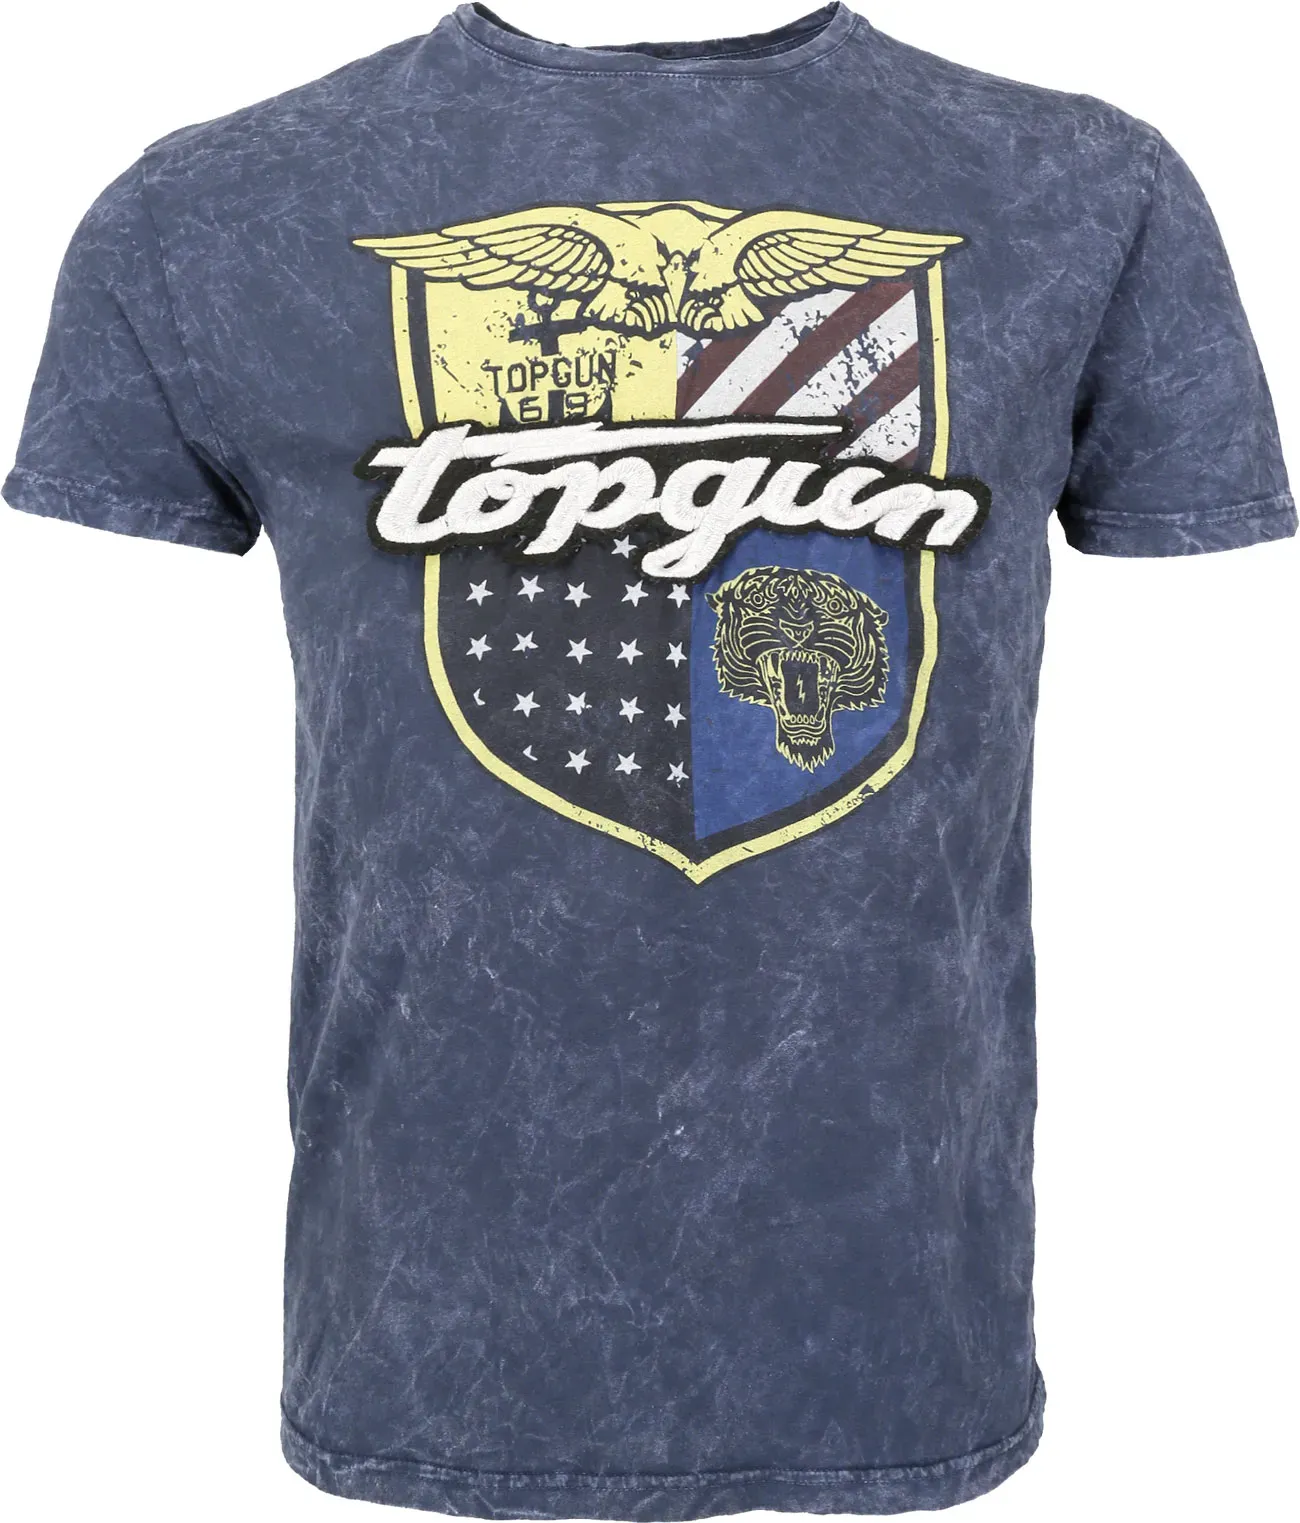 Top Gun Insignia, t-shirt - Bleu Foncé - M